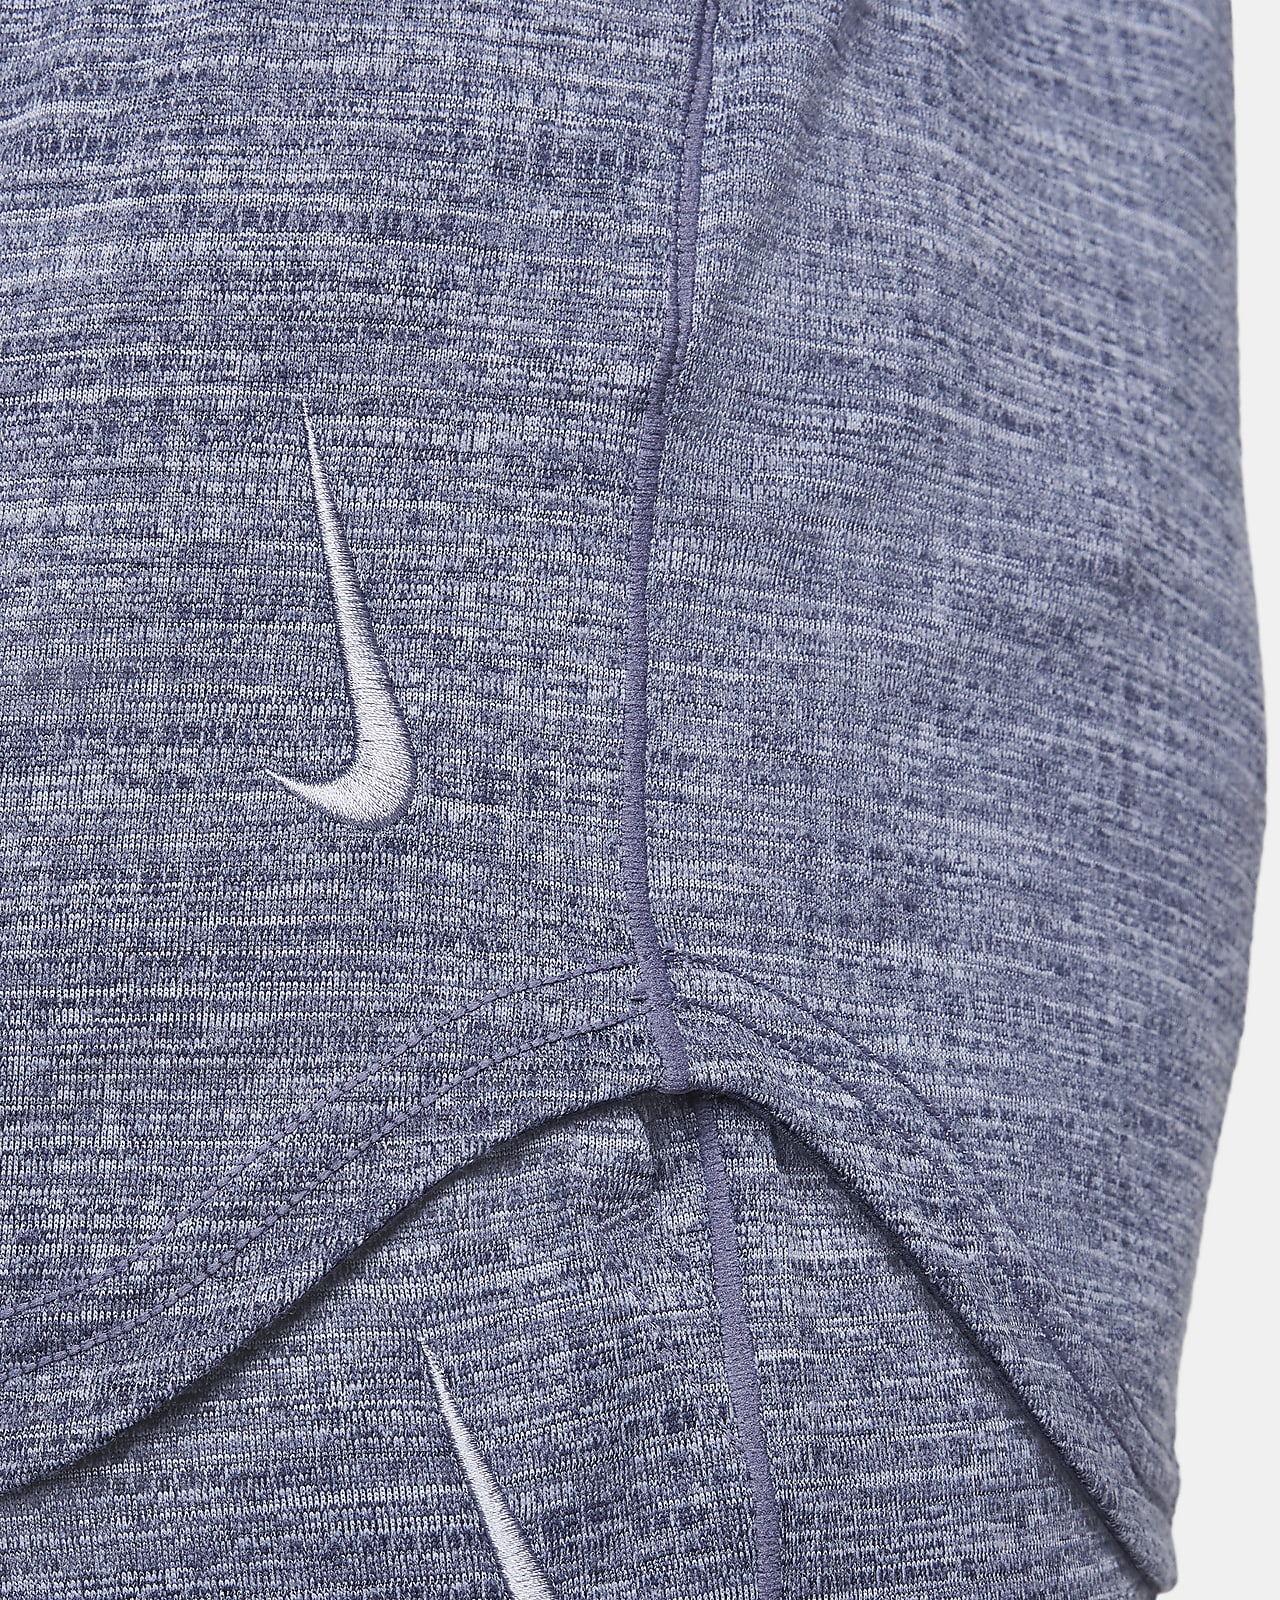 Nike Men's Yoga Dri-fit Top In Blue